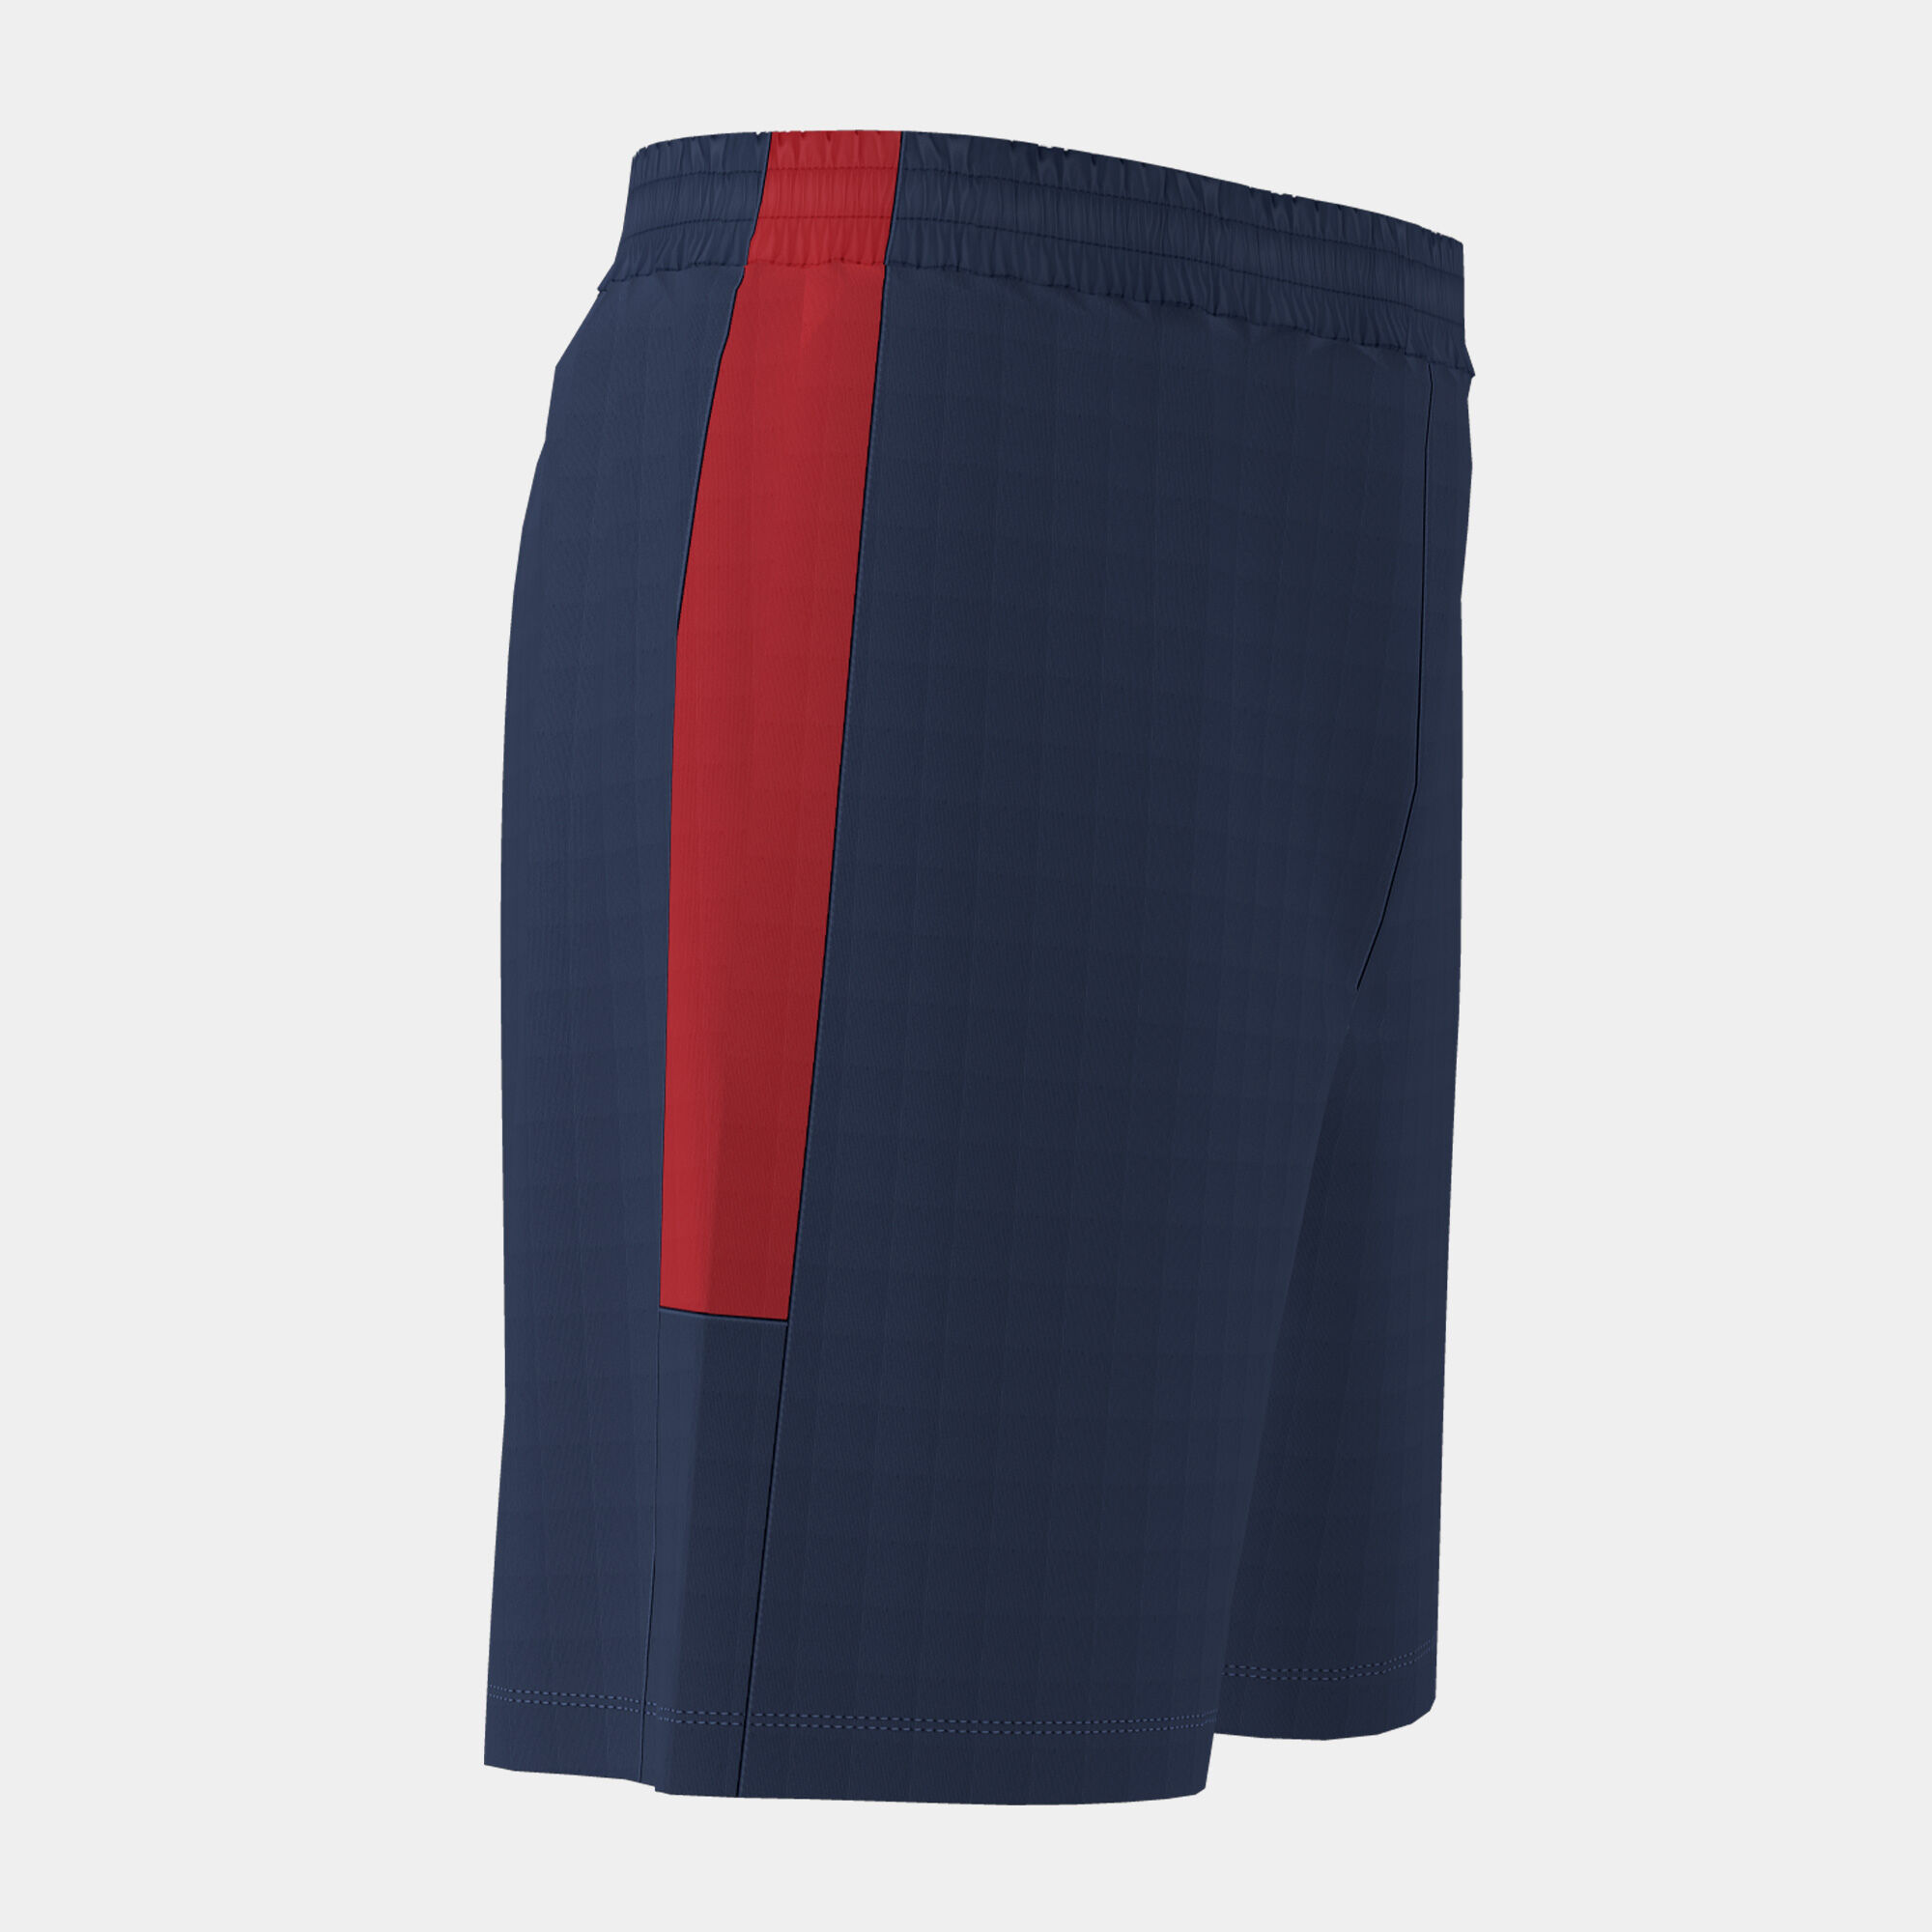 Bermuda shorts man Eco Championship navy blue red